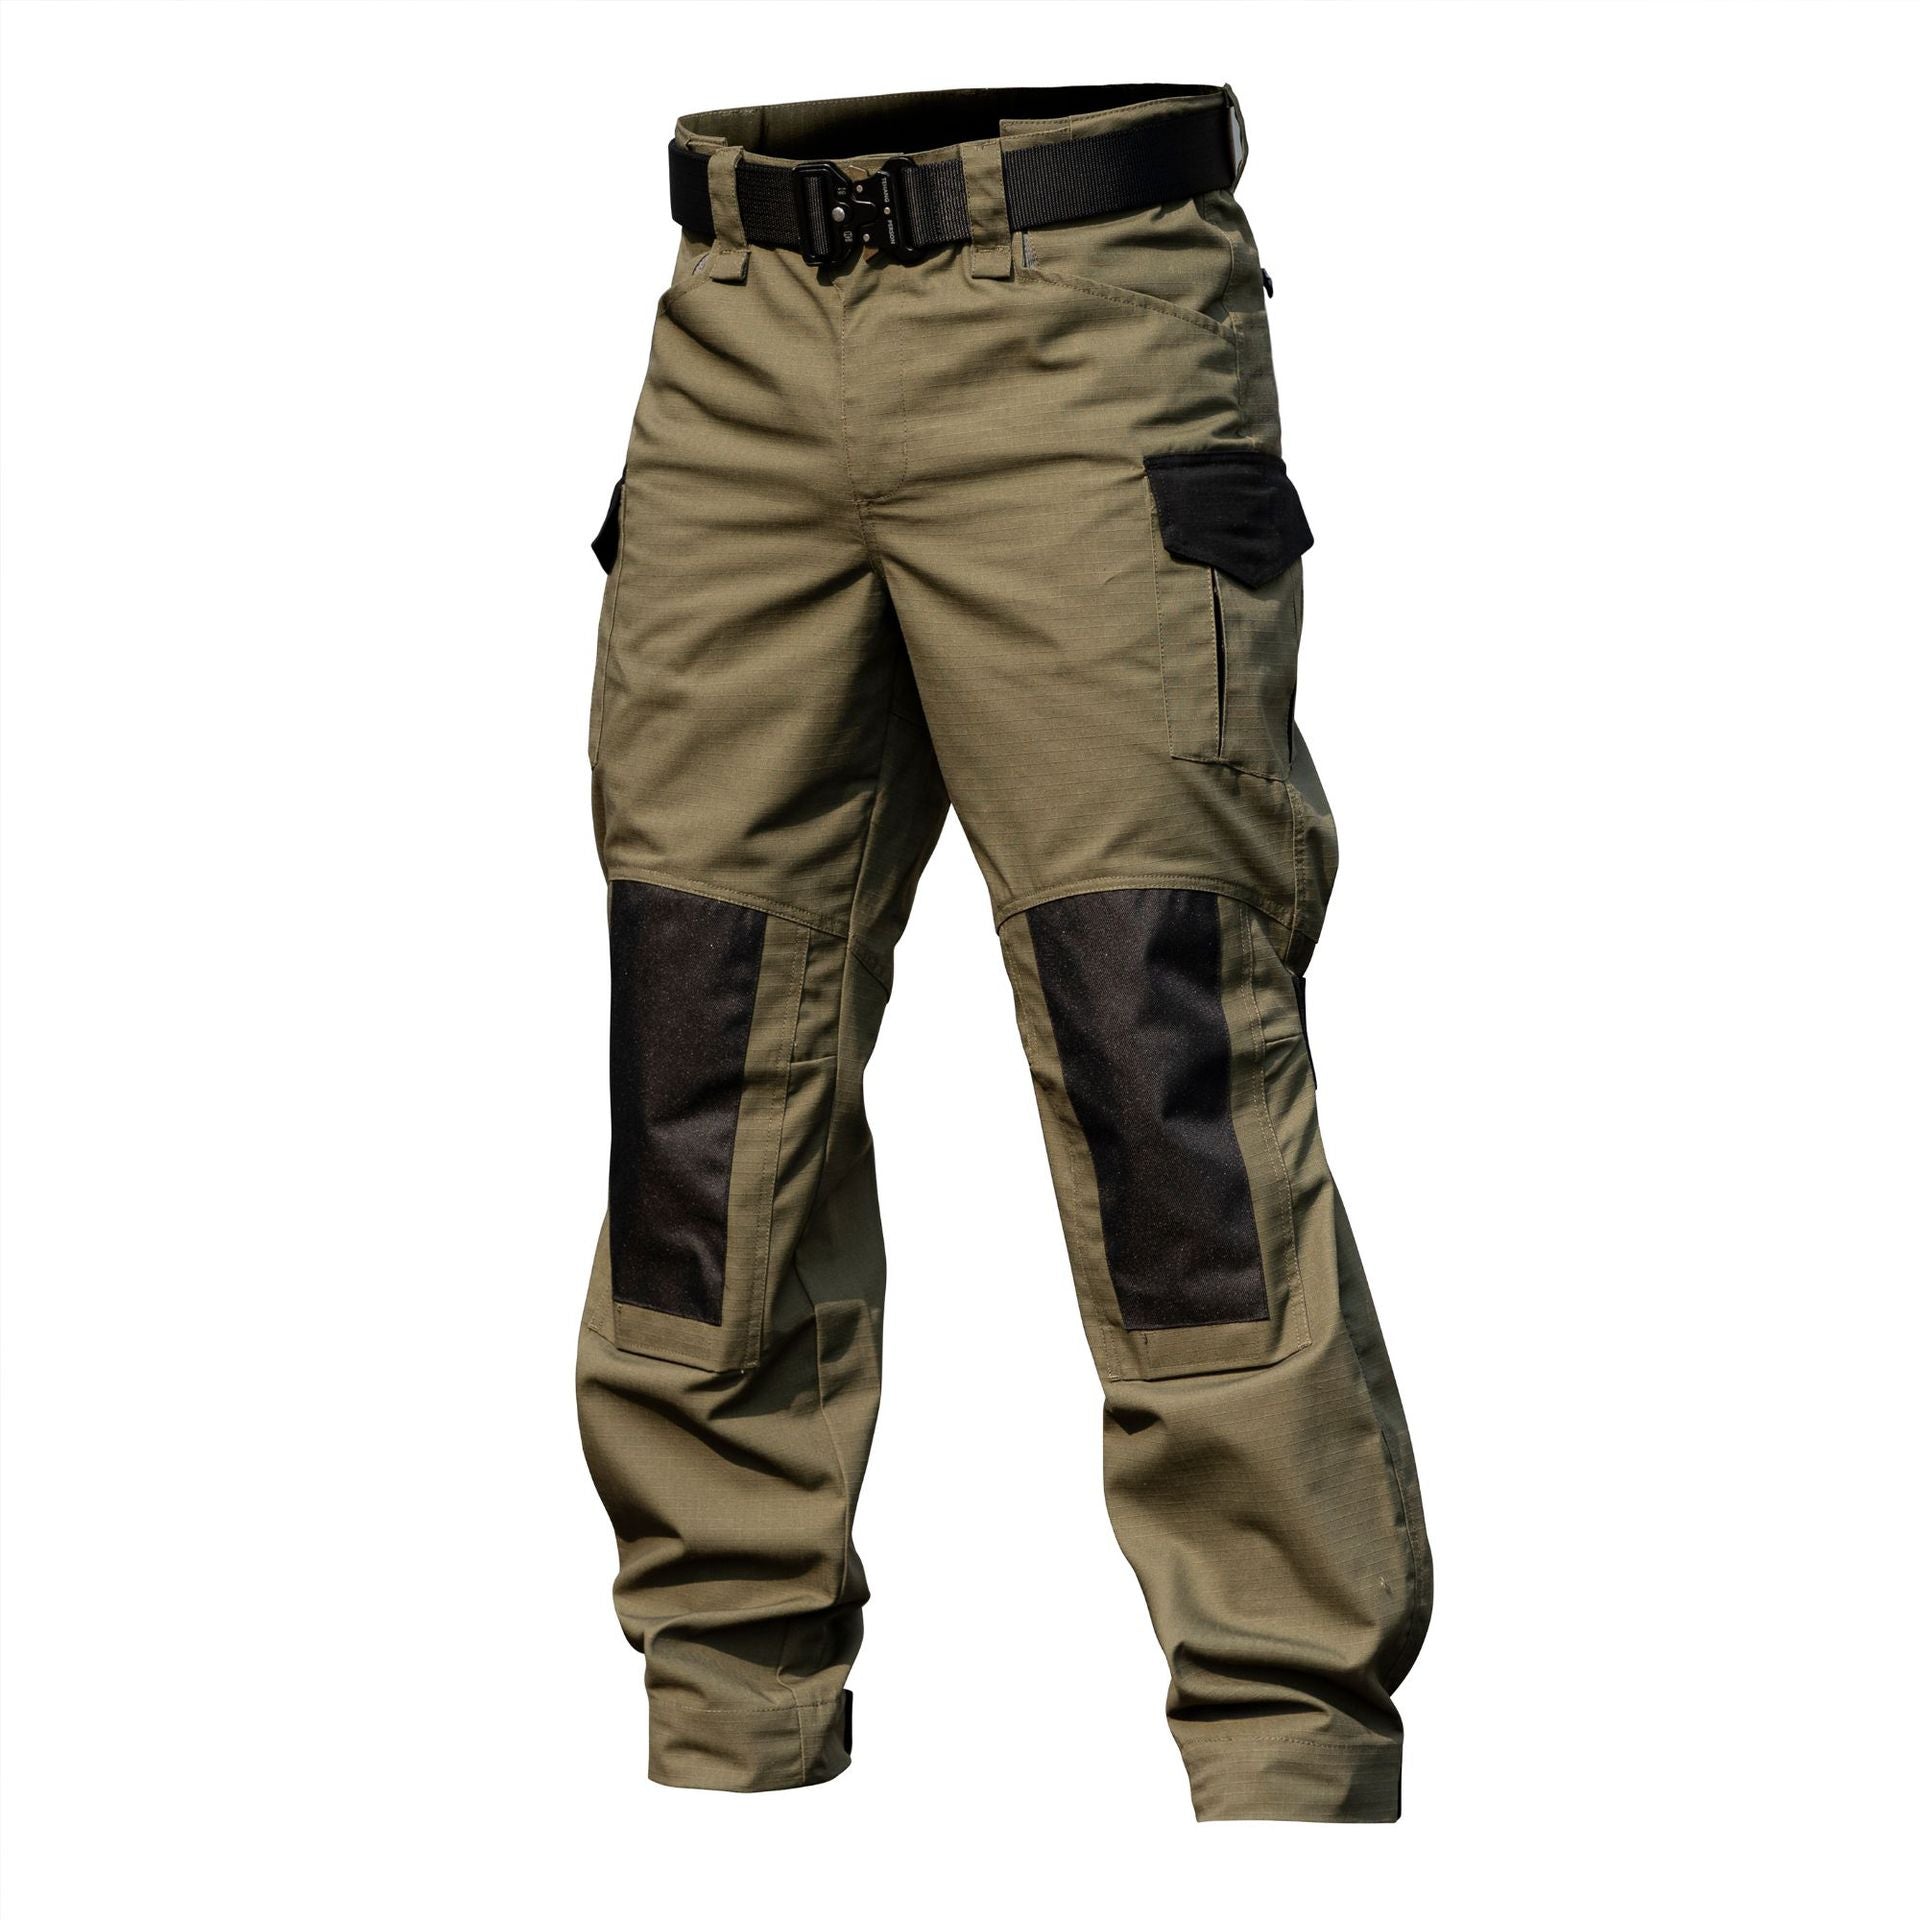 YUHAOTIN Combat Tactical Outdoor Casual Pants Work Trousers Men